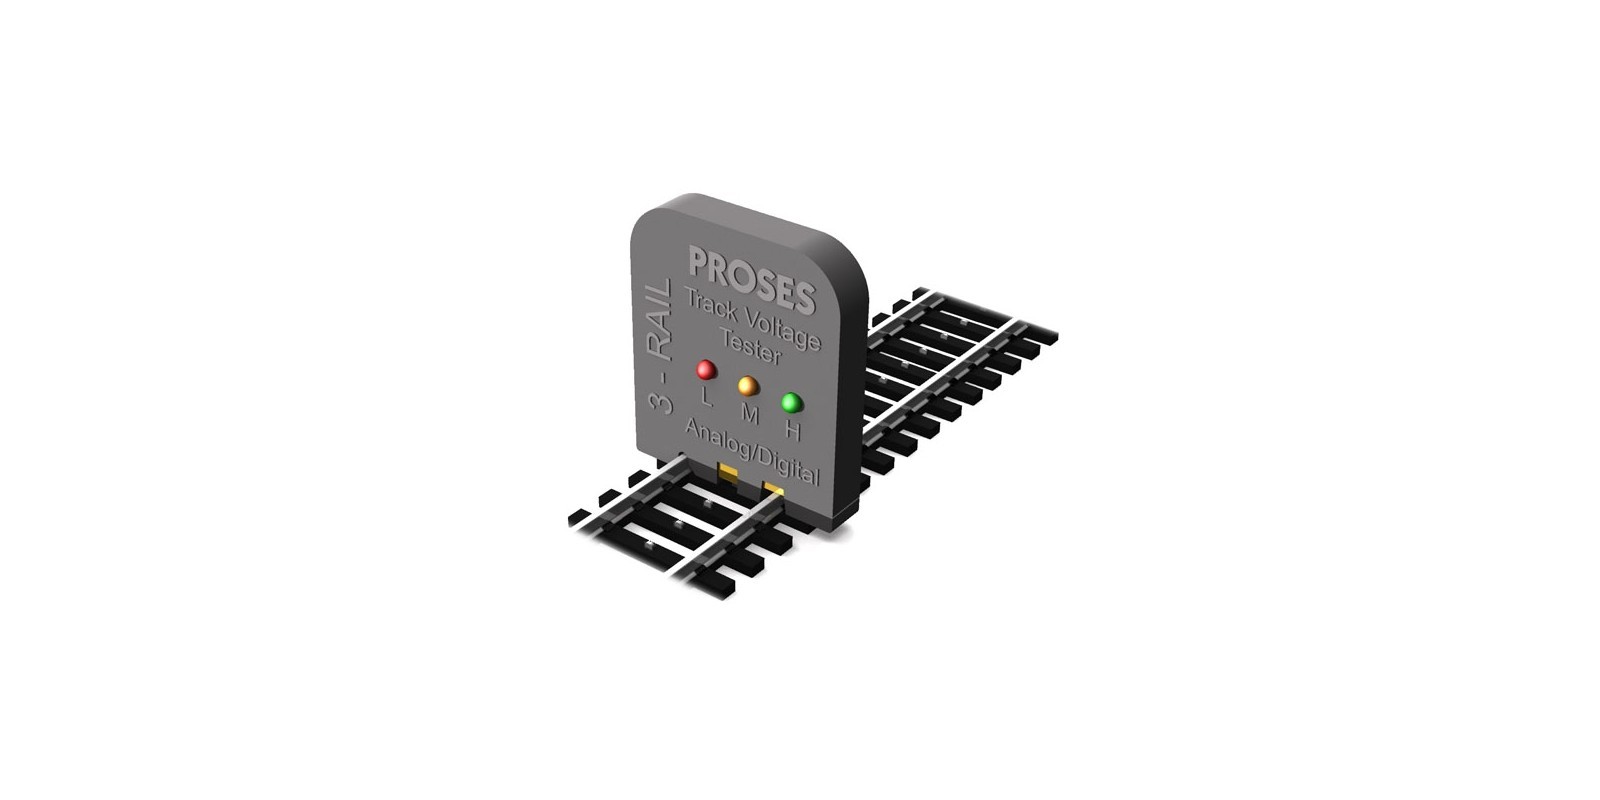 PS-VT-002  3-Rail Voltage Tester for Marklin tracks. View larger 3-Rail Track Voltage Tester (HO, Marklin 3-rail Tracks)